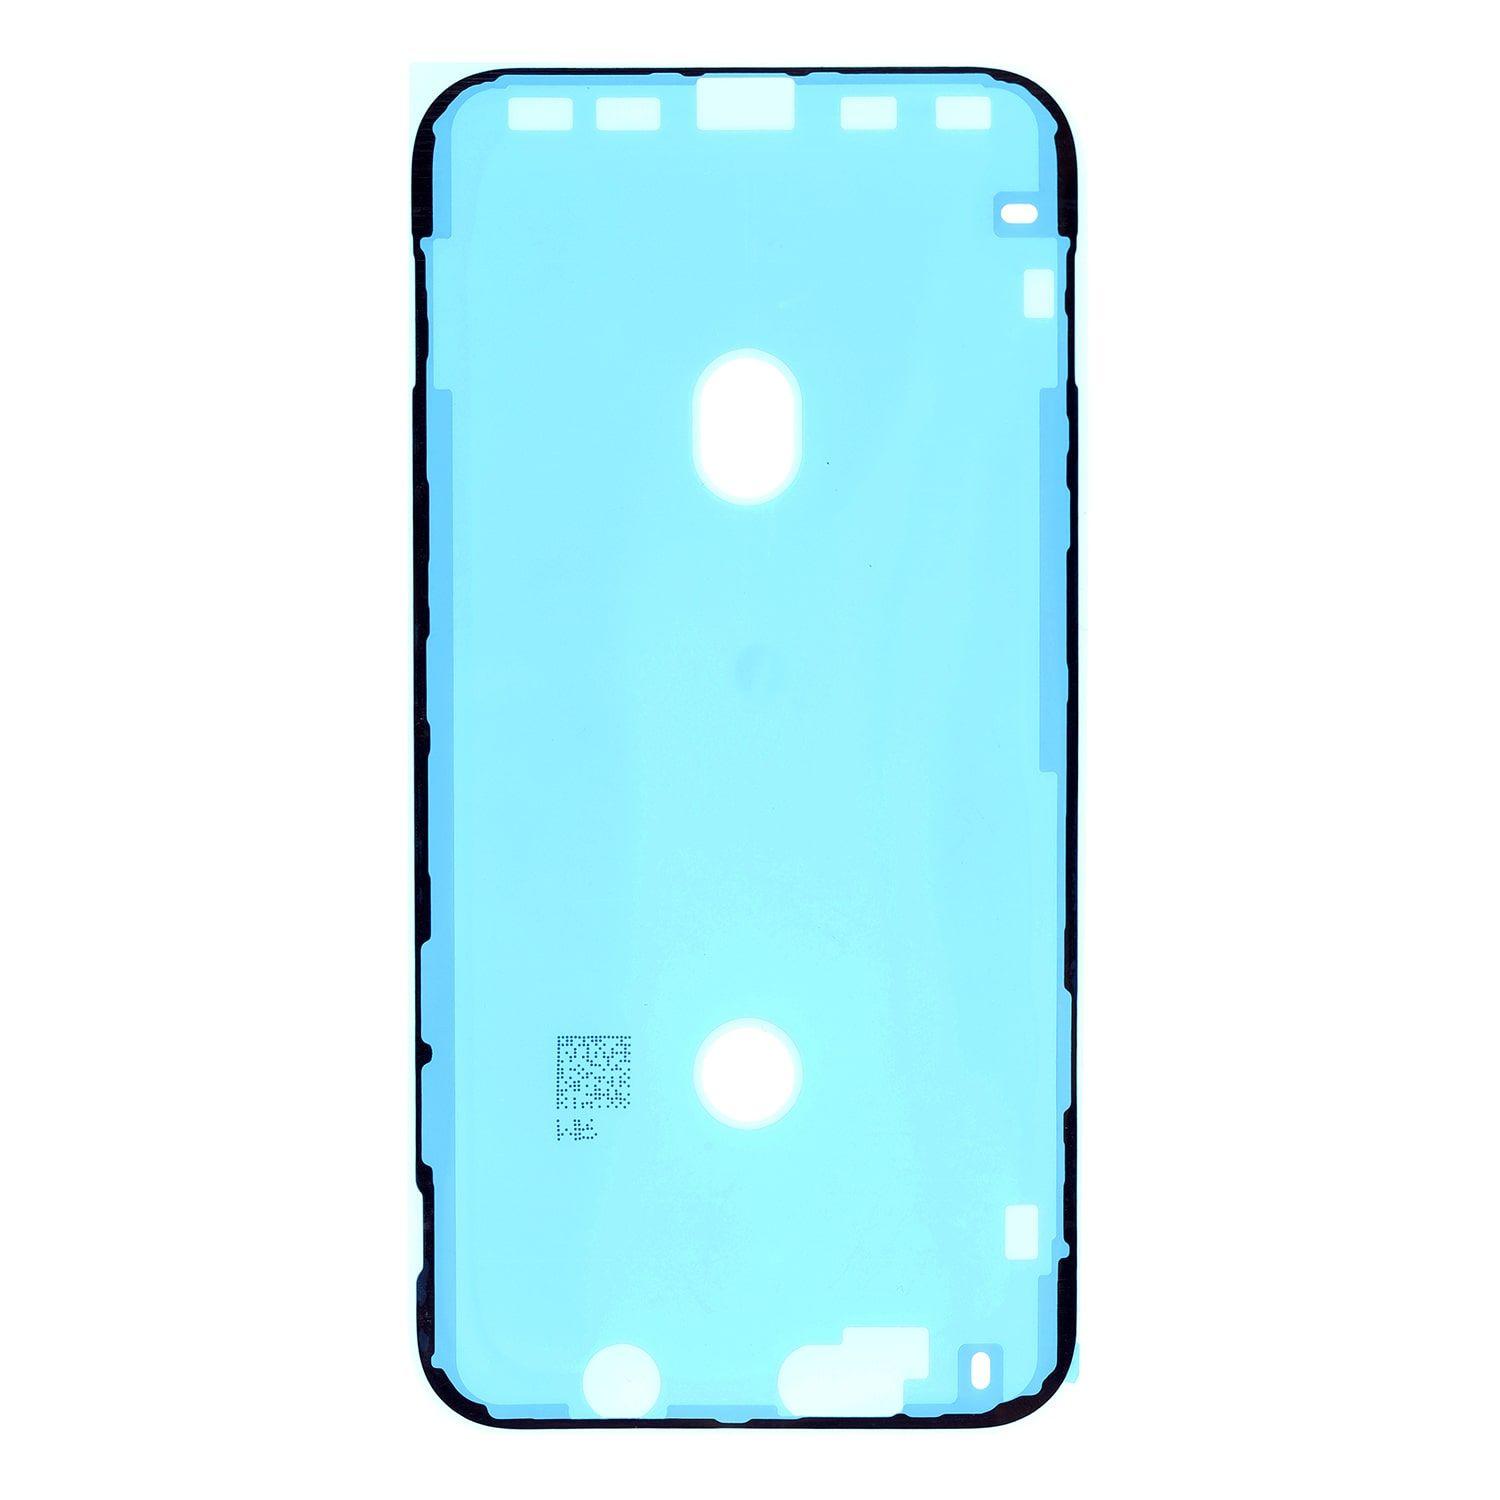 Montážní lepící páska LCD iPhone XR